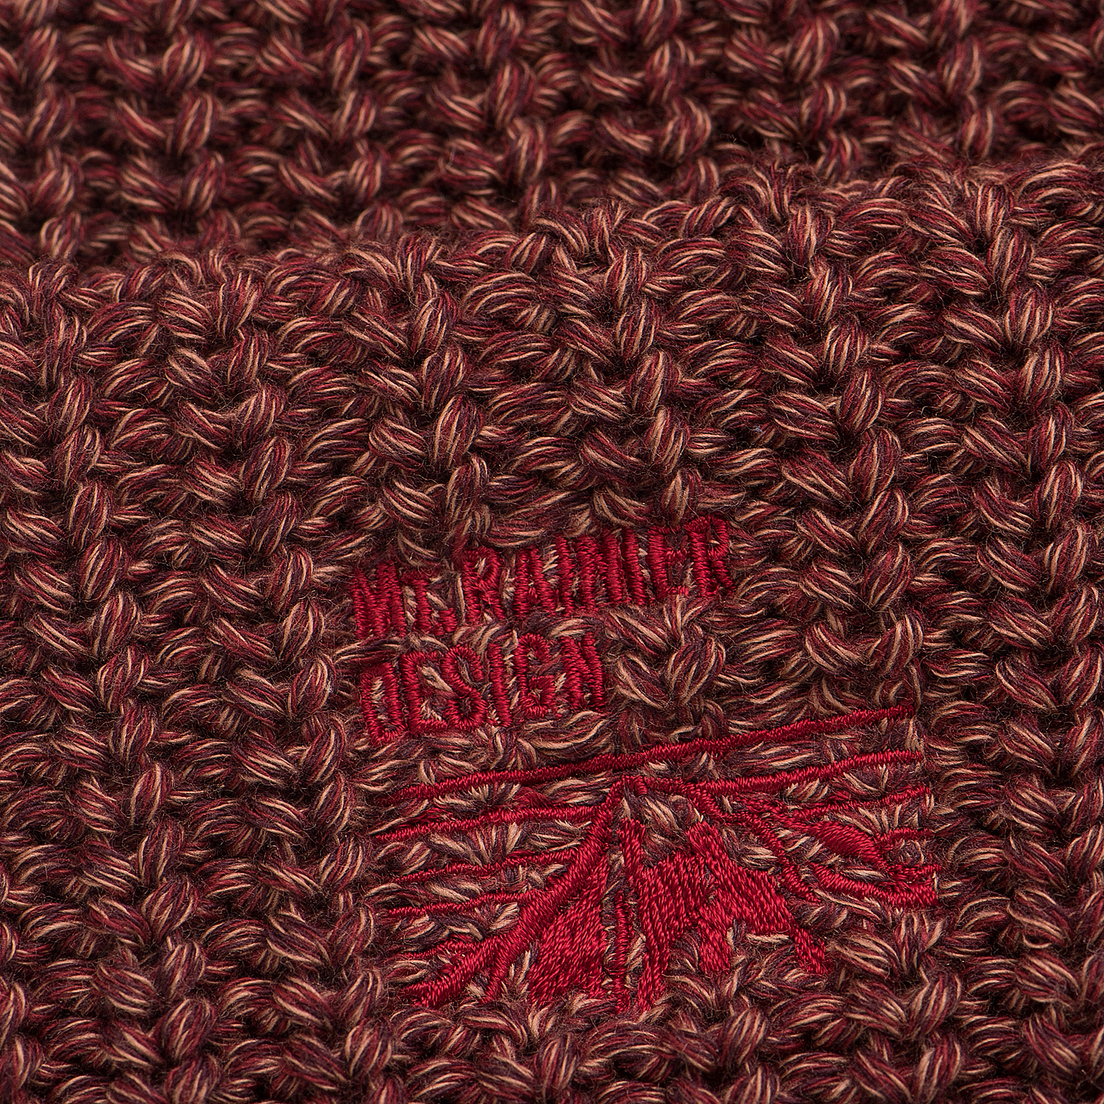 Mt. Rainier Design Шапка Knit